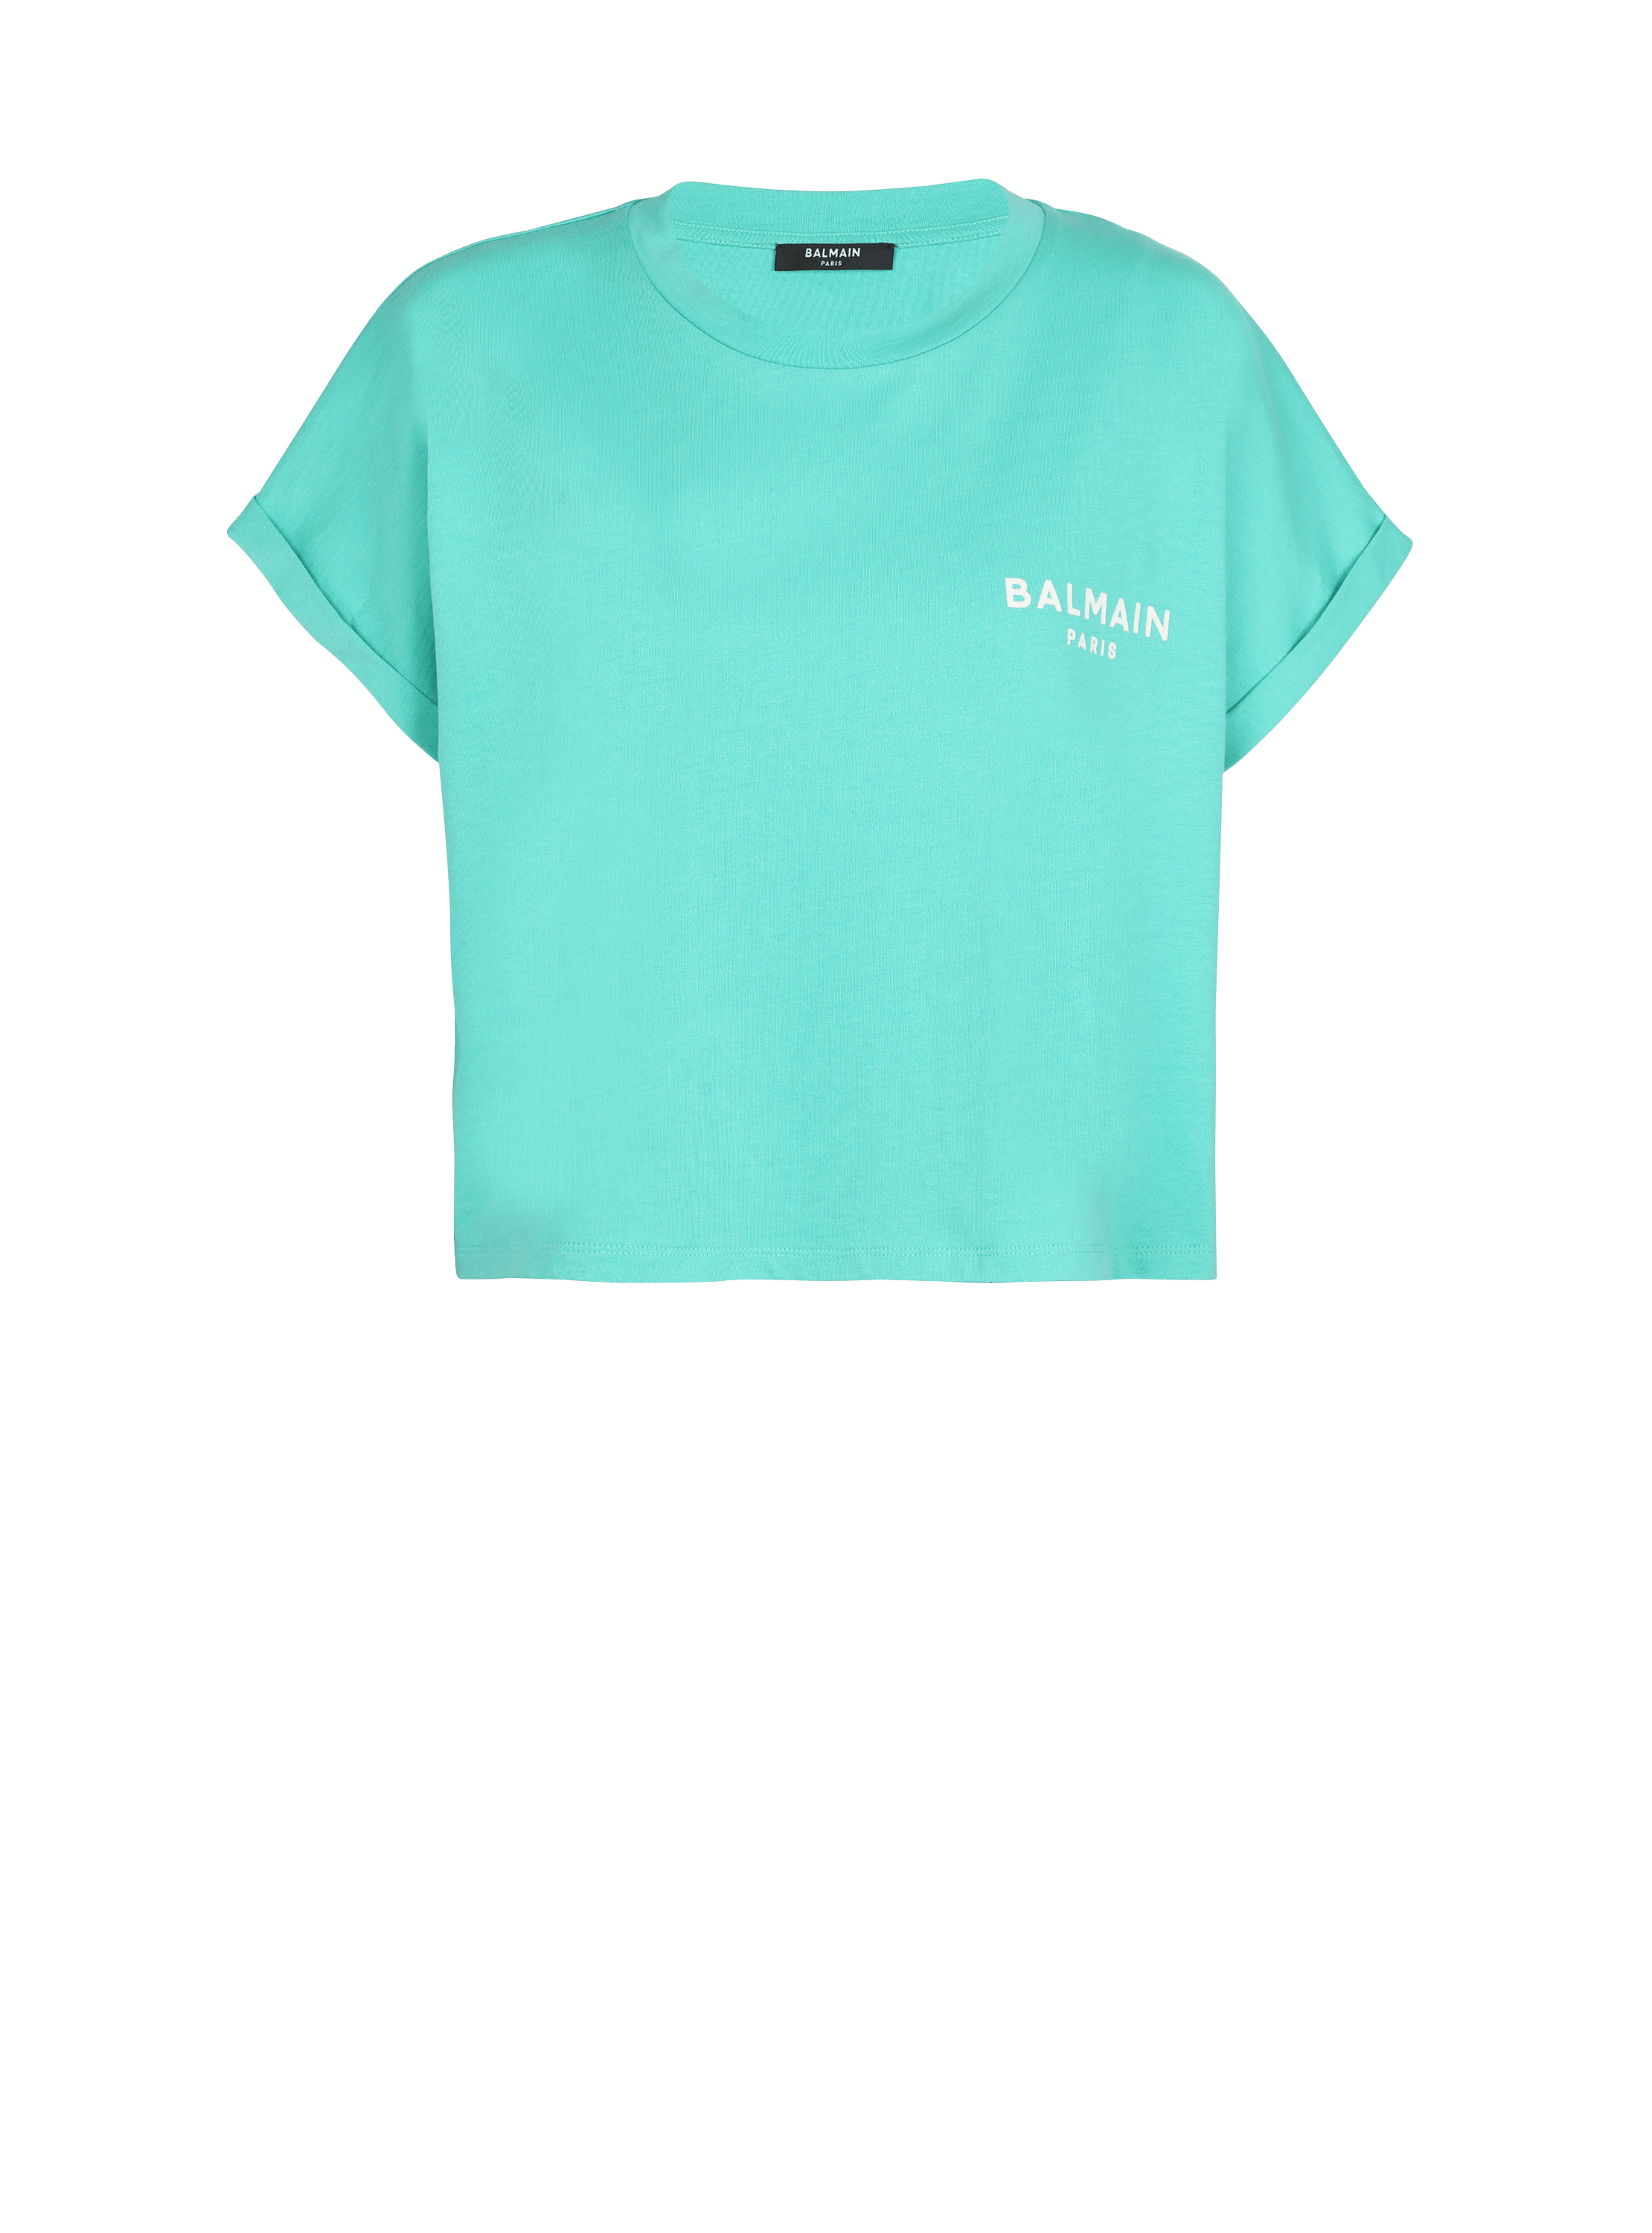 Eco-responsible cropped cotton T-shirt with Balmain logo print, blue, hi-res